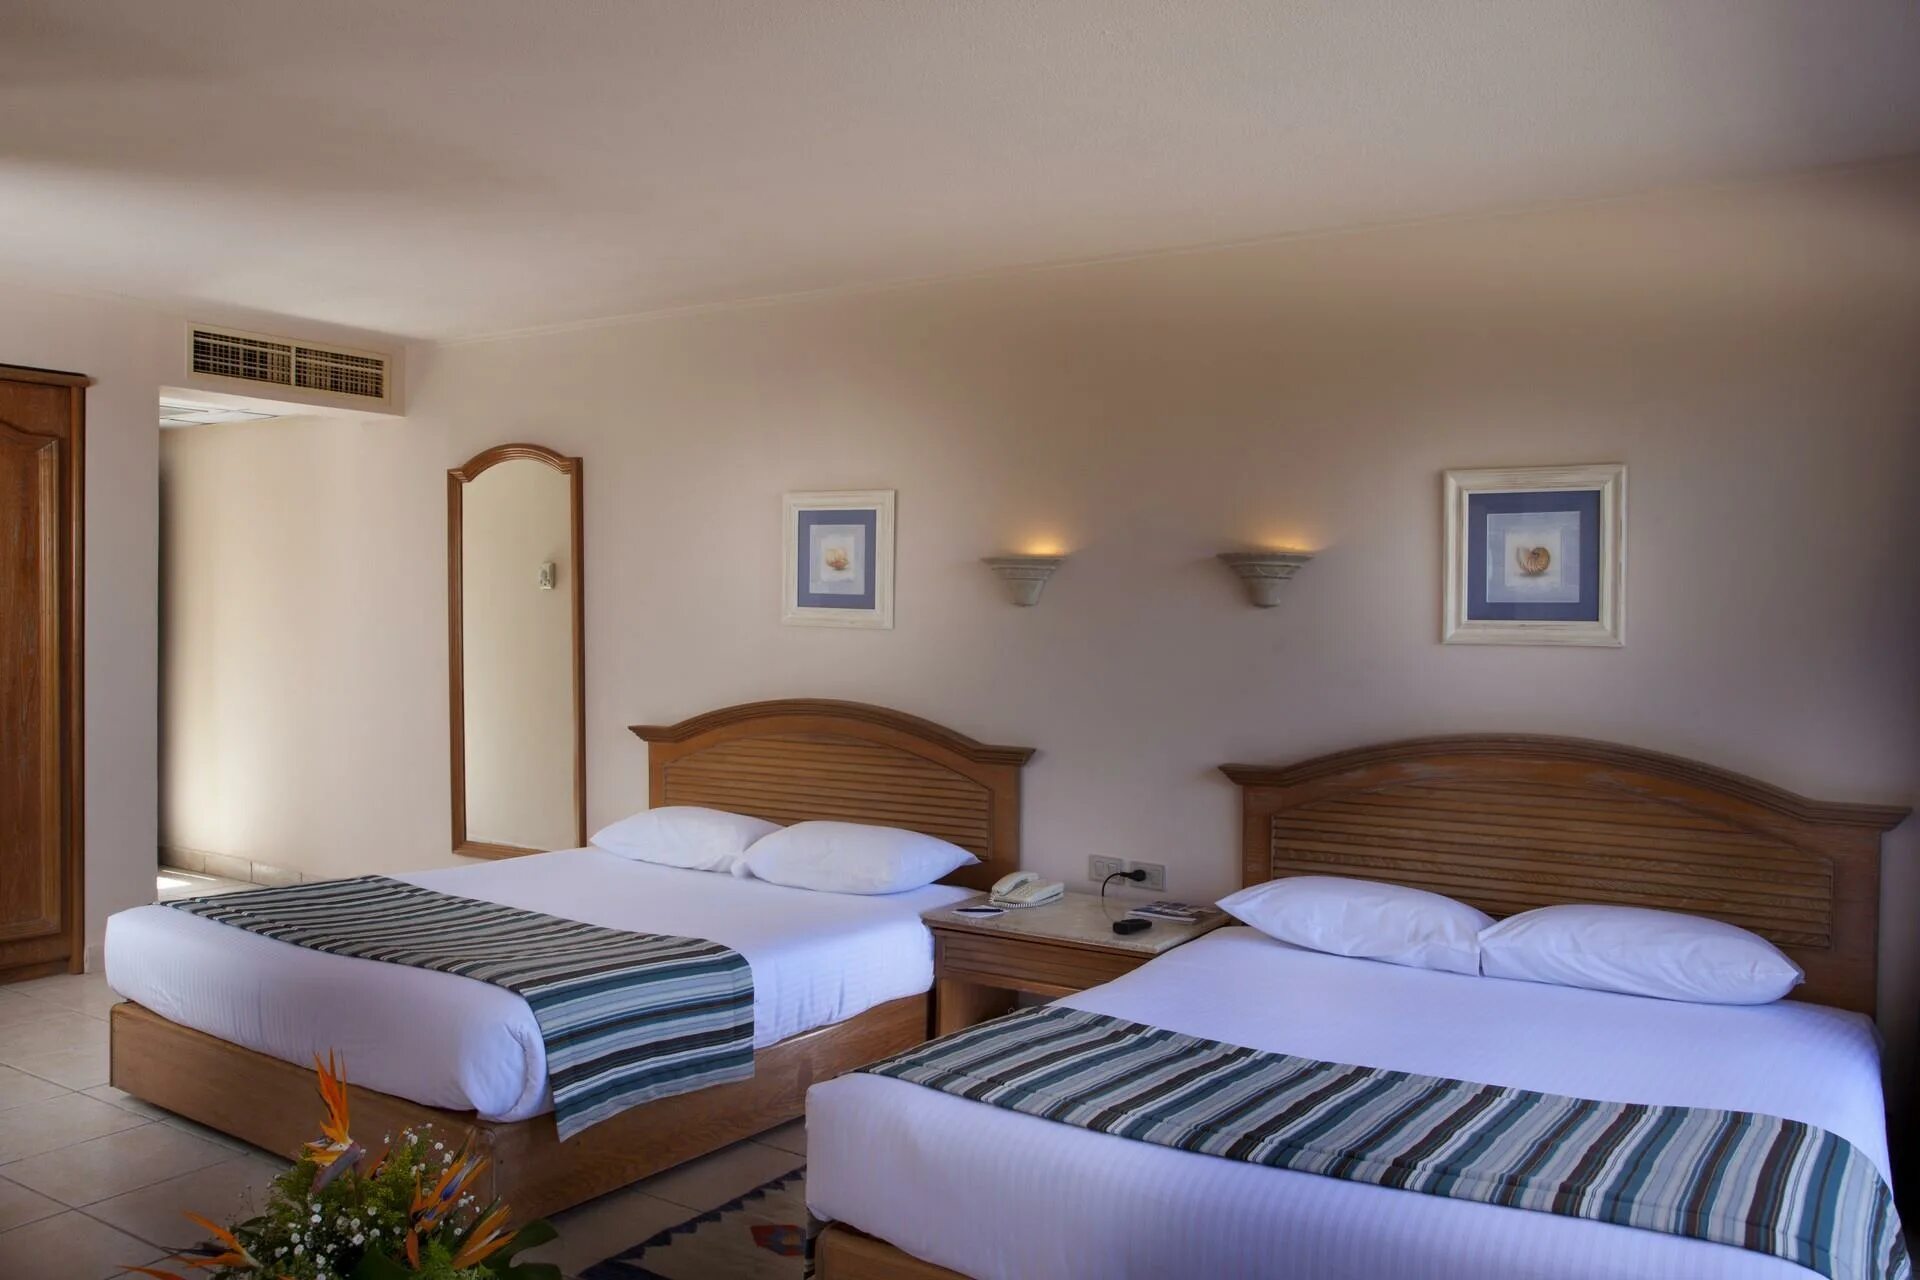 Coral beach rotana resort. Отель Coral Beach Hotel Hurghada. Корал Бич Хургада. Coral Beach Hotel Hurghada 4. Египет Хургада отель Корал Бич Резорт 4 звезды.